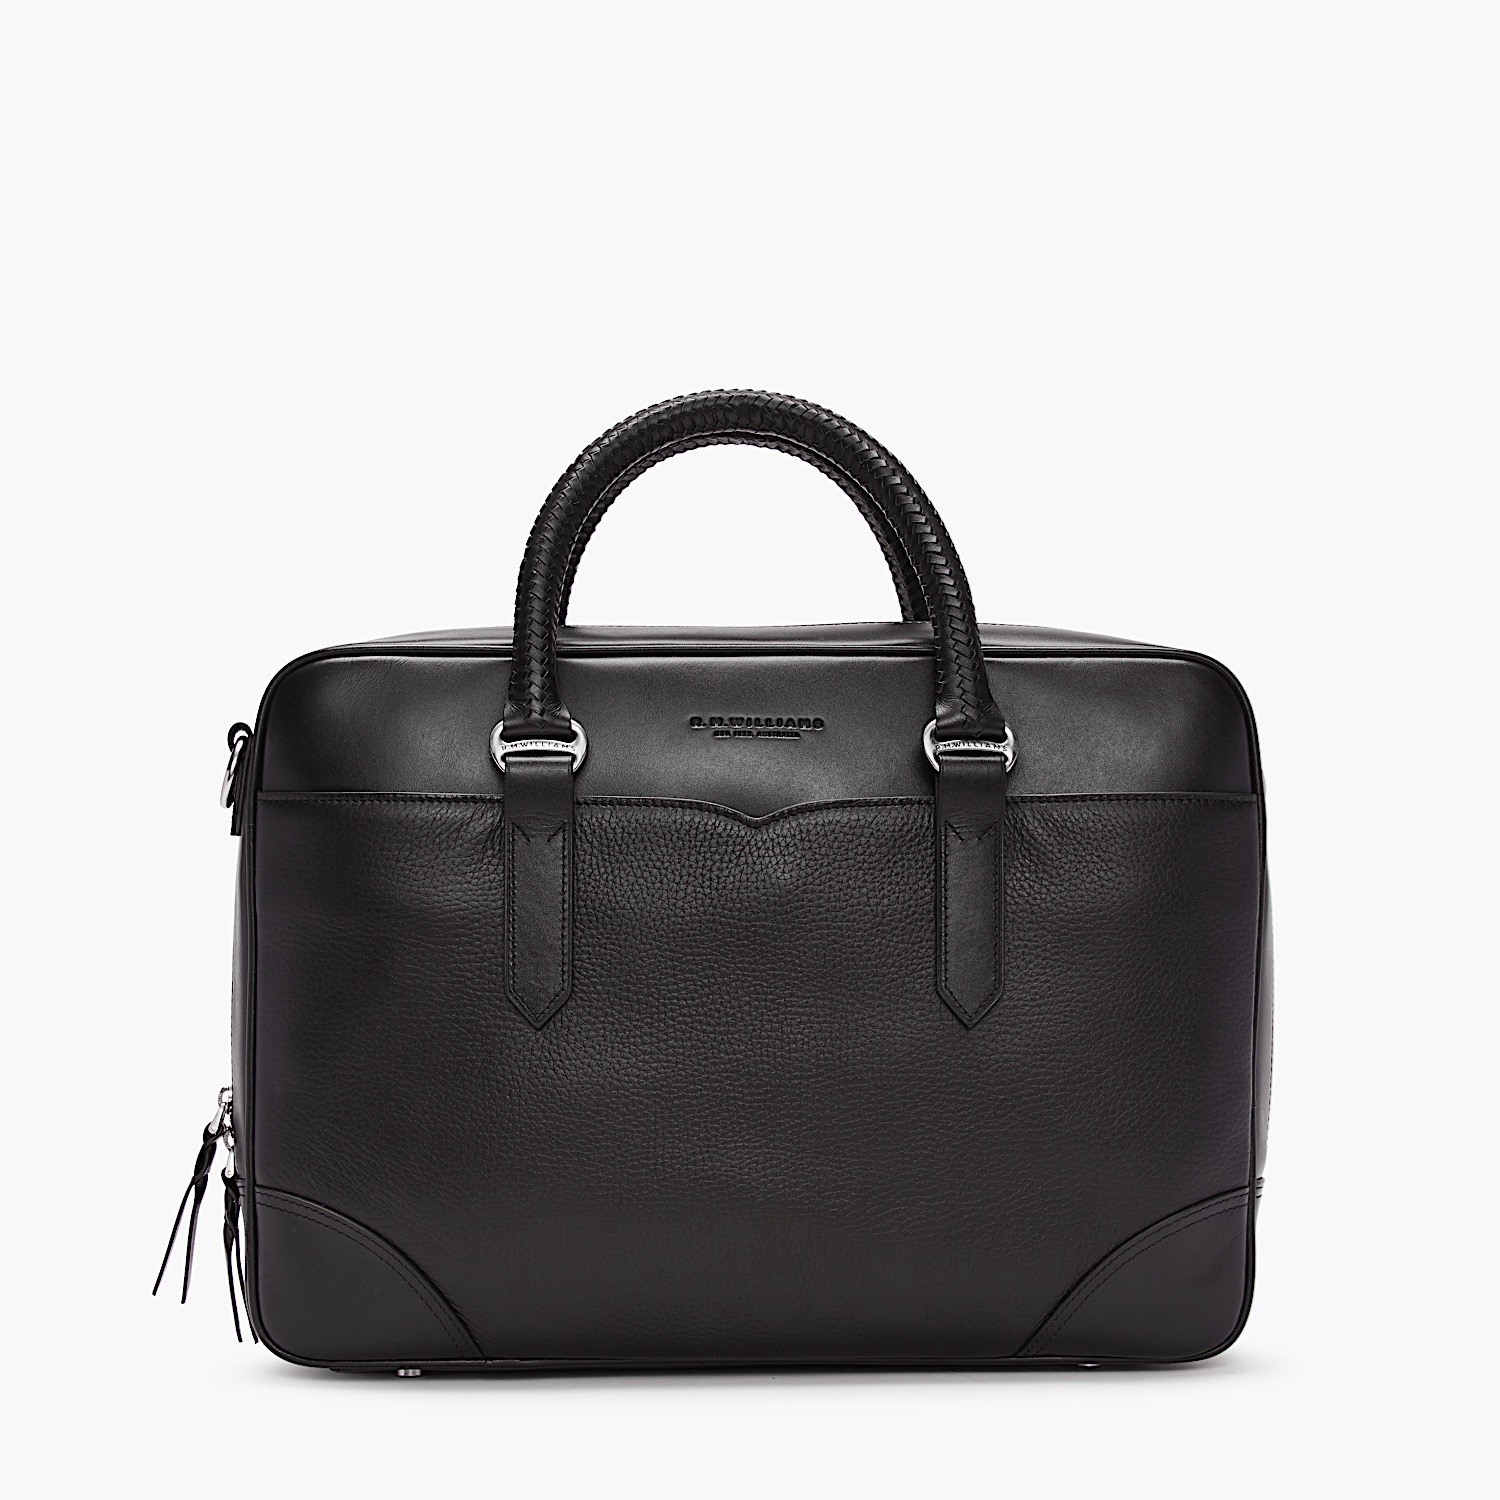 RM Williams Signature Peppled Leather Briefcase - Black | Port Phillip Shop